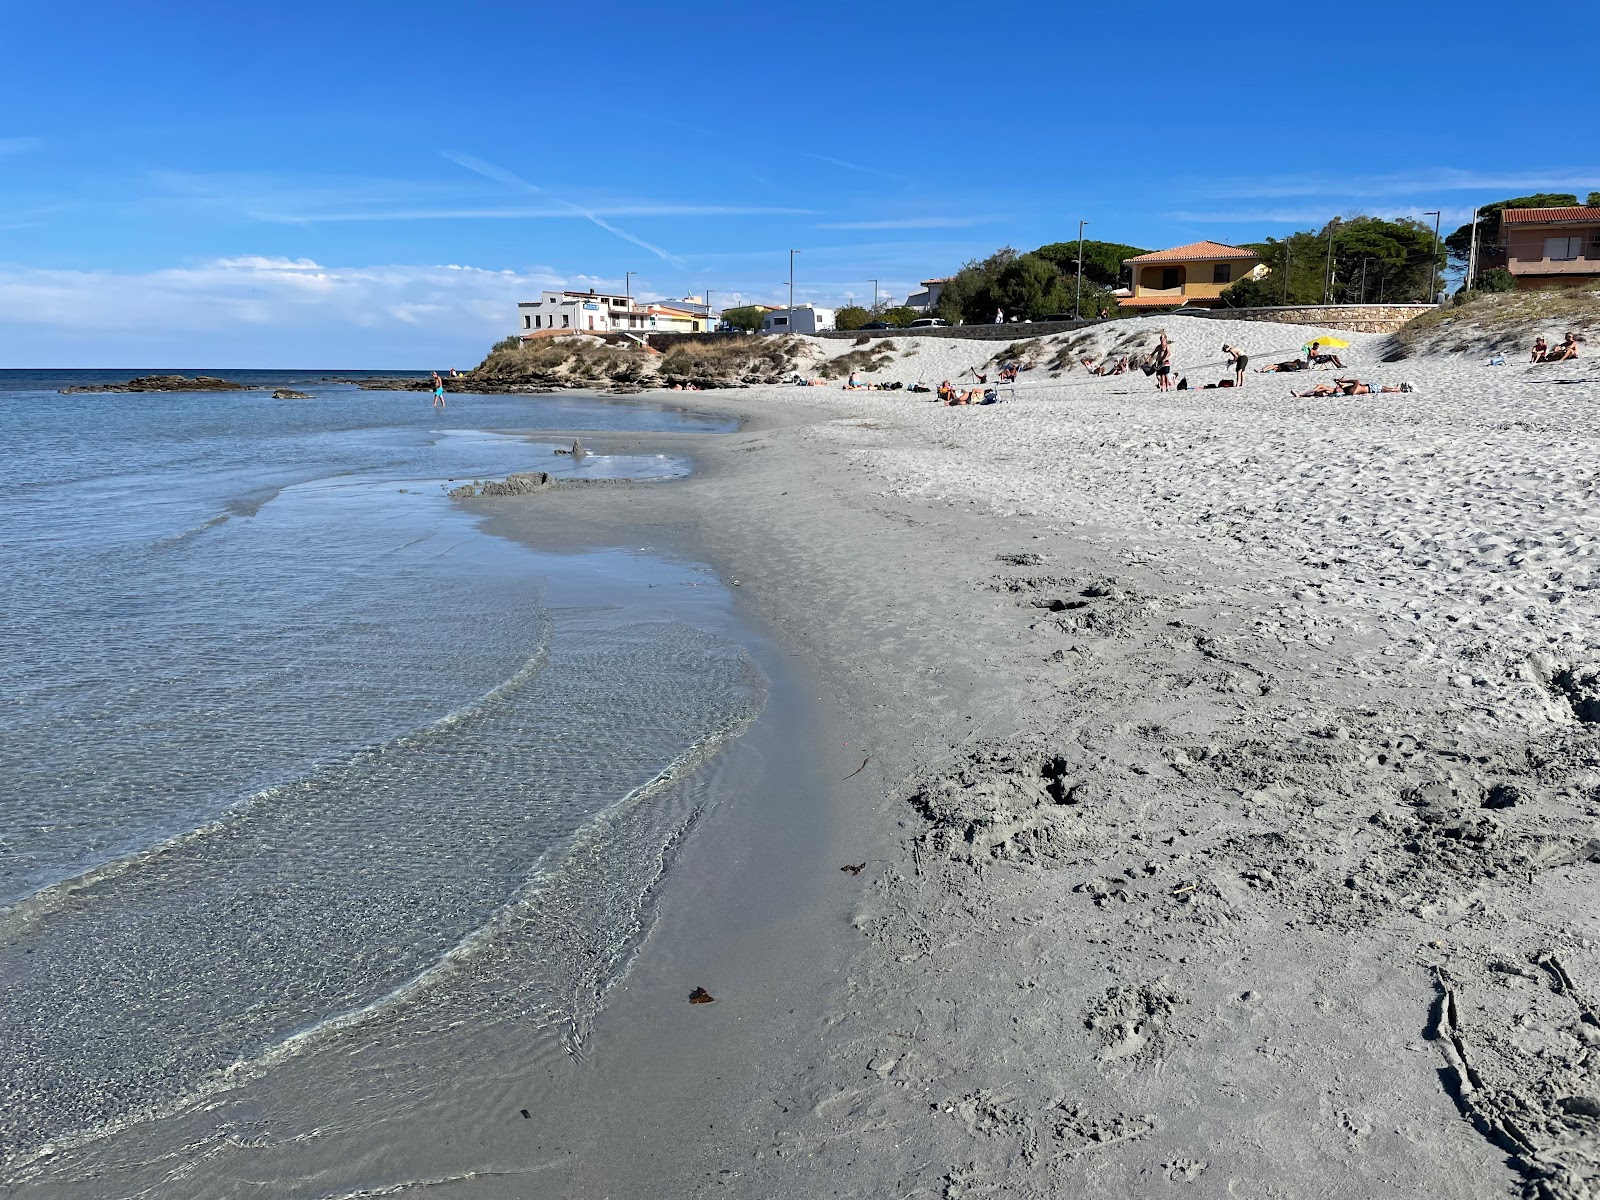 Foto de Spiaggia di Santa Lucia - lugar popular entre os apreciadores de relaxamento